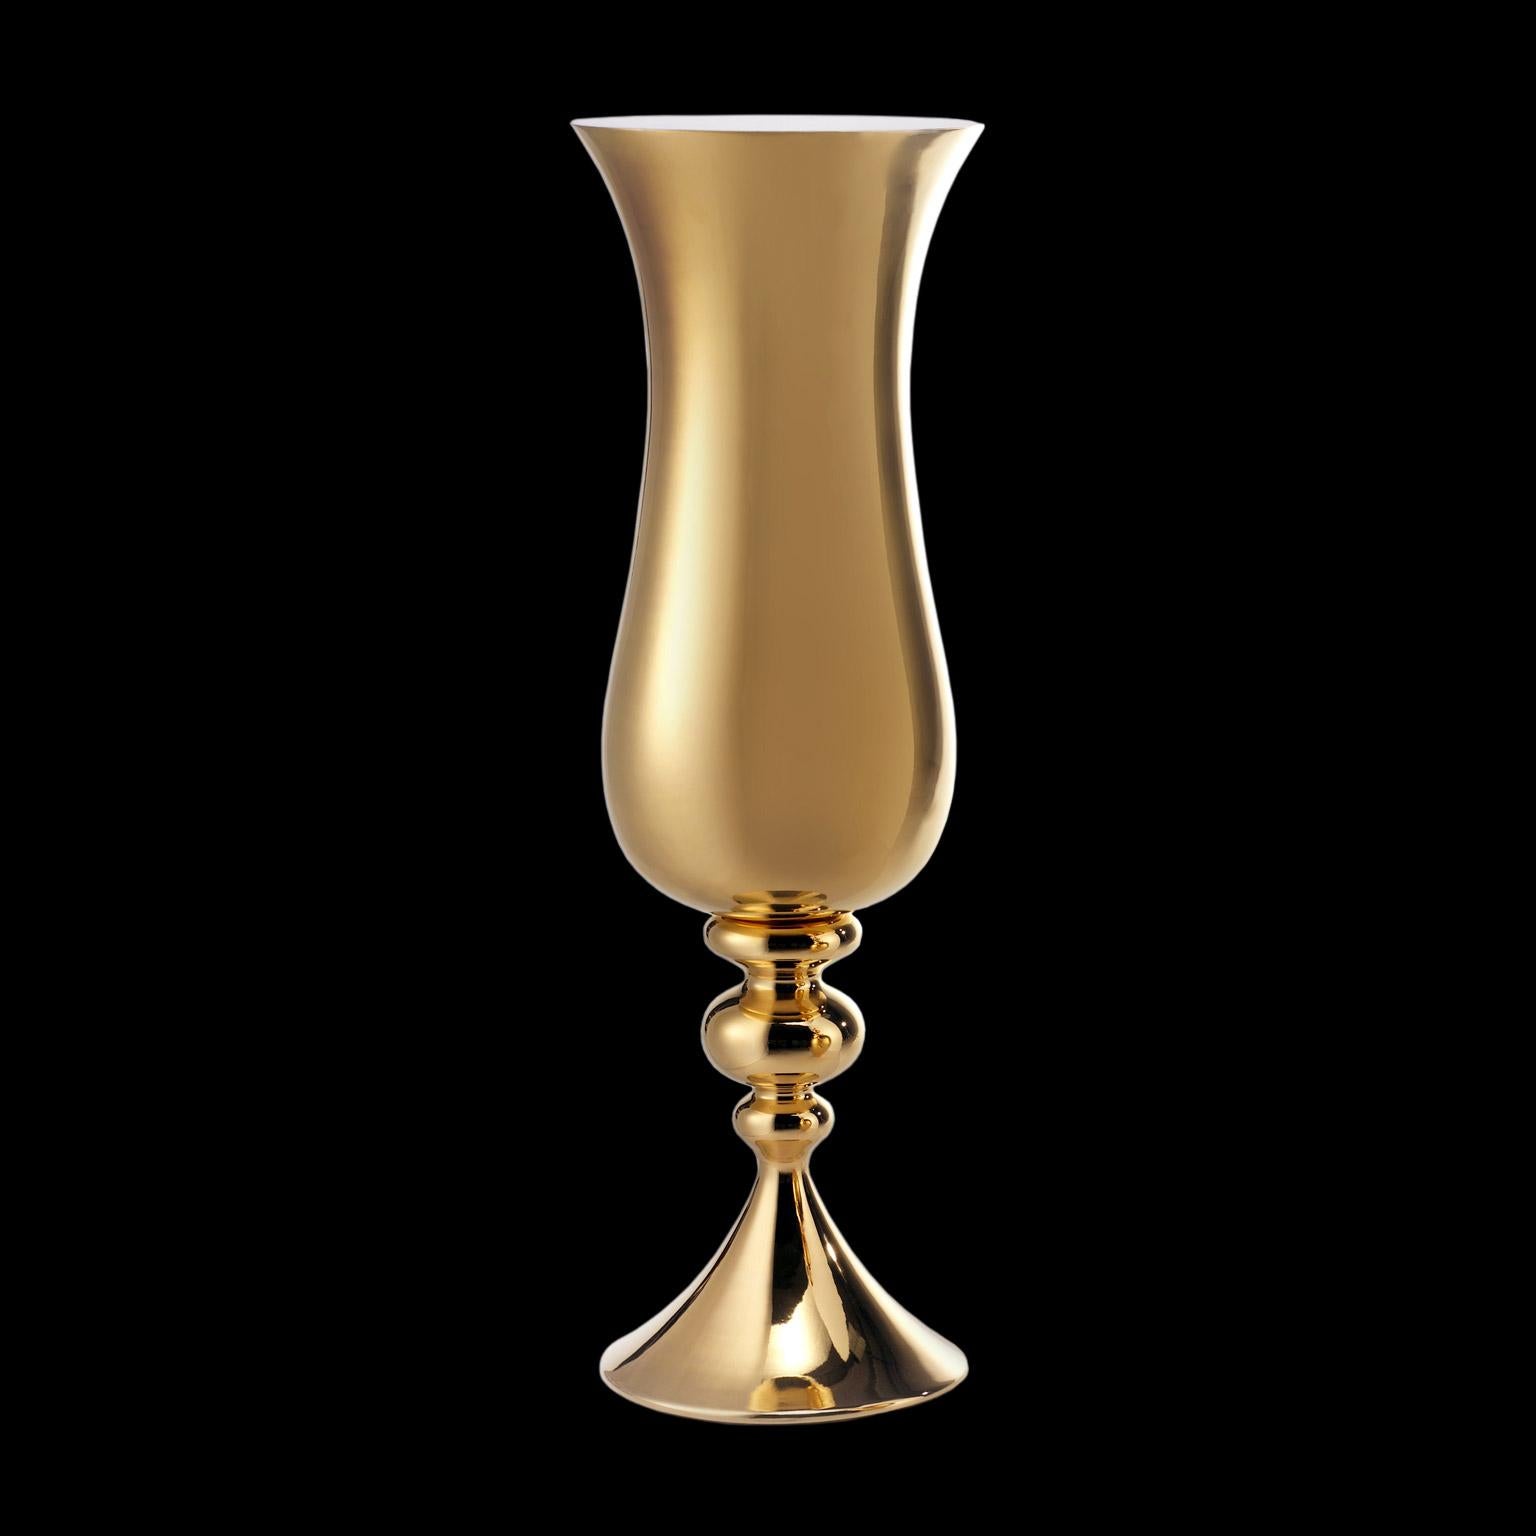 Ceramic vase LOTH handcrafted in 24-karat gold, white mat glazed inside  
cod. CP050 


measures: 
H. 140.0 cm.
Dm. 40.0 cm.